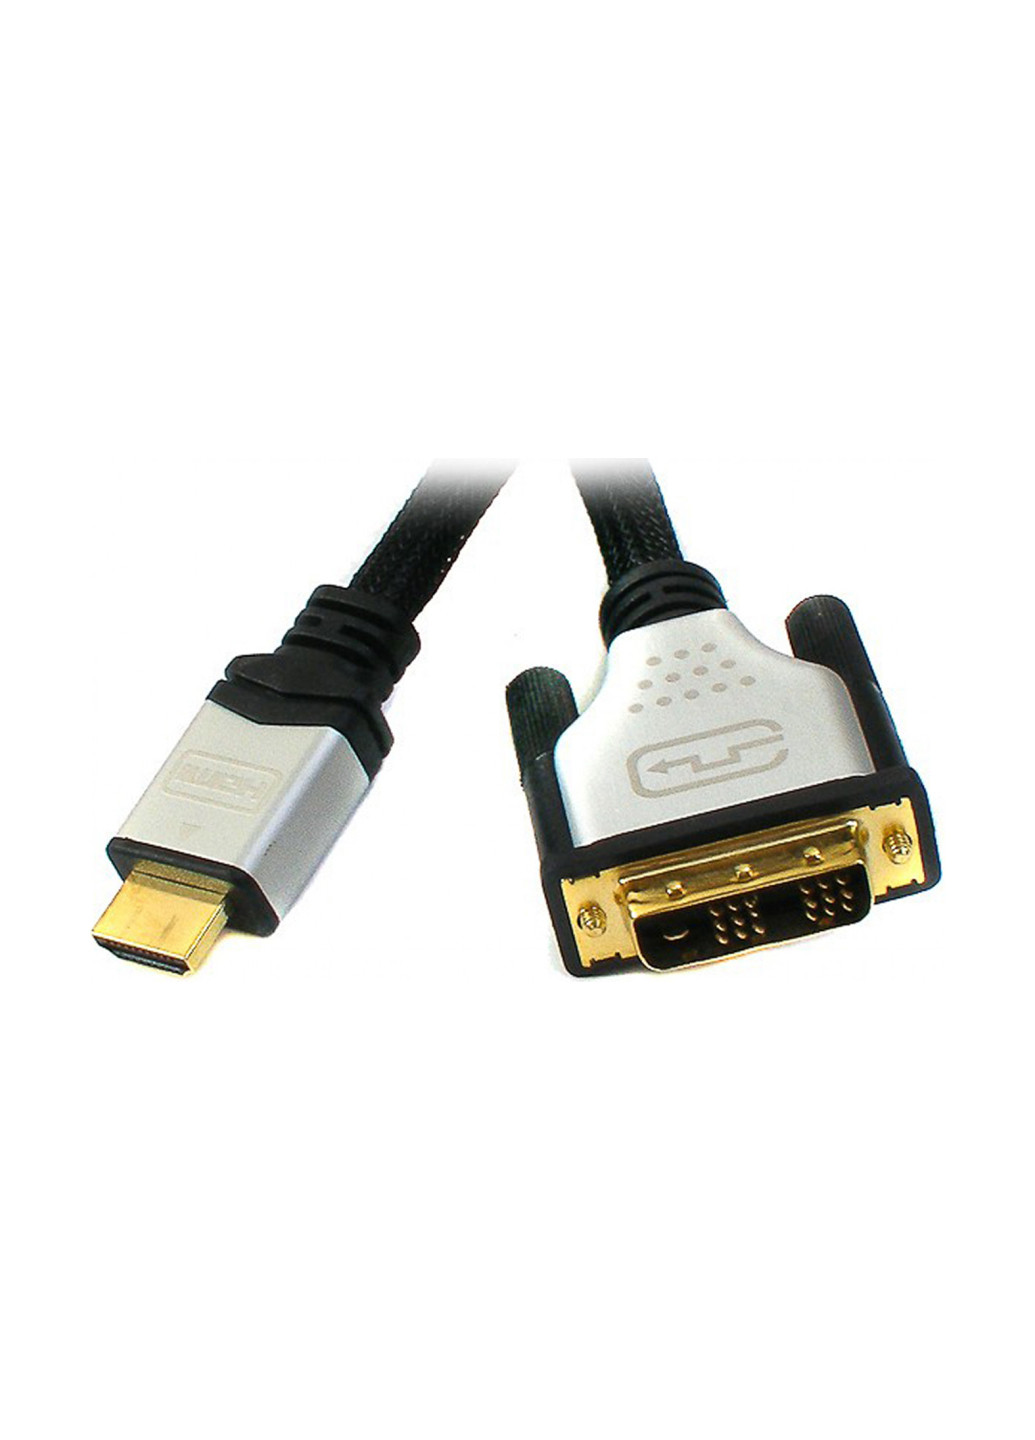 Кабель HDMI-DVI (18 + 1) 1.8м., M / M, алюм.кожух (VD103) Viewcon hdmi-dvi (18+1) 1.8м.,m/m, алюм.кожух (vd103) (137776179)